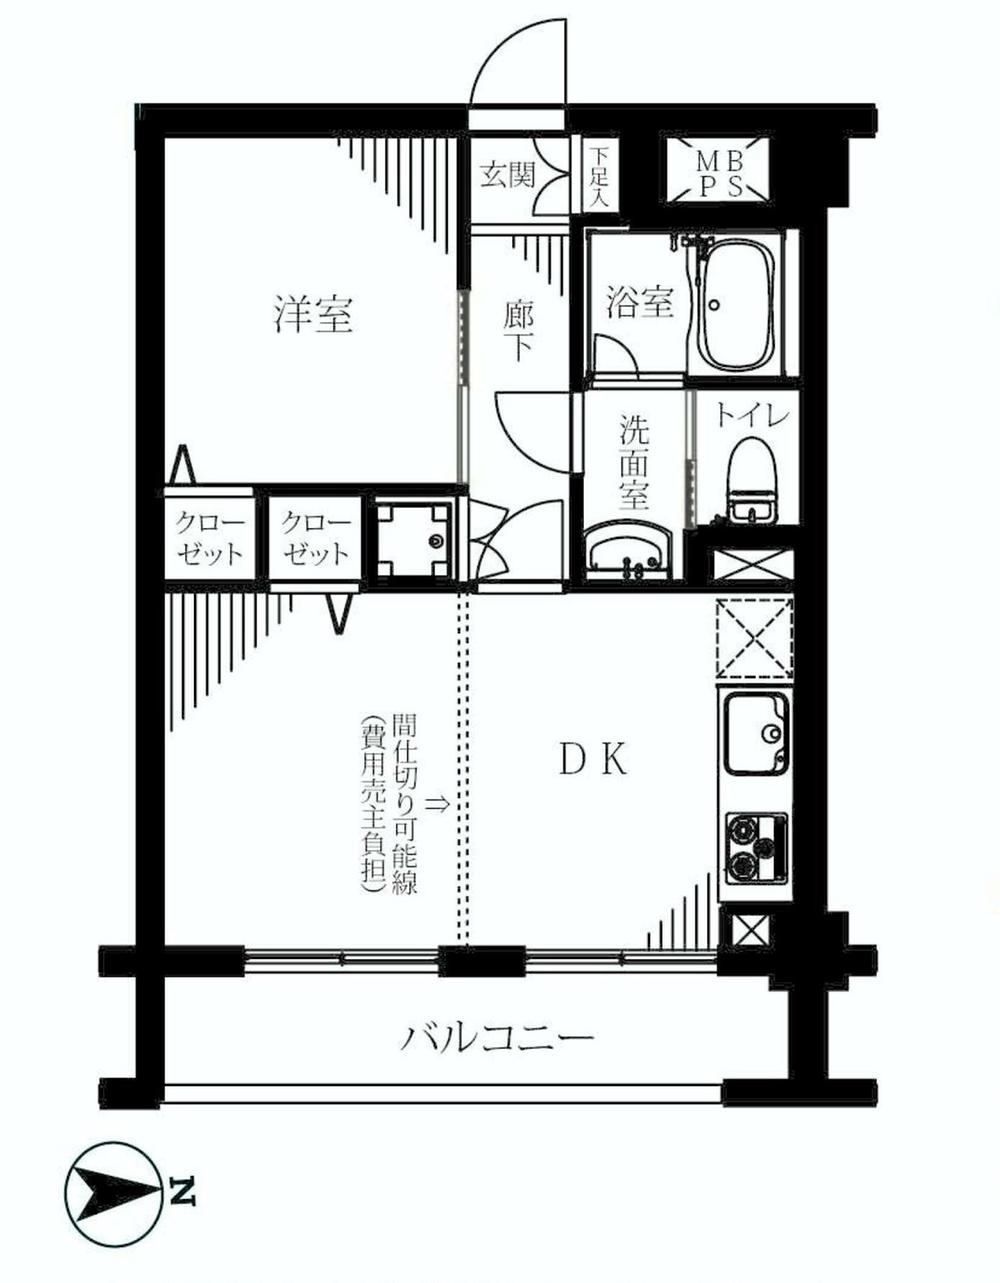 Floor plan. 2DK, Price 16.8 million yen, Occupied area 38.31 sq m , Balcony area 6.16 sq m